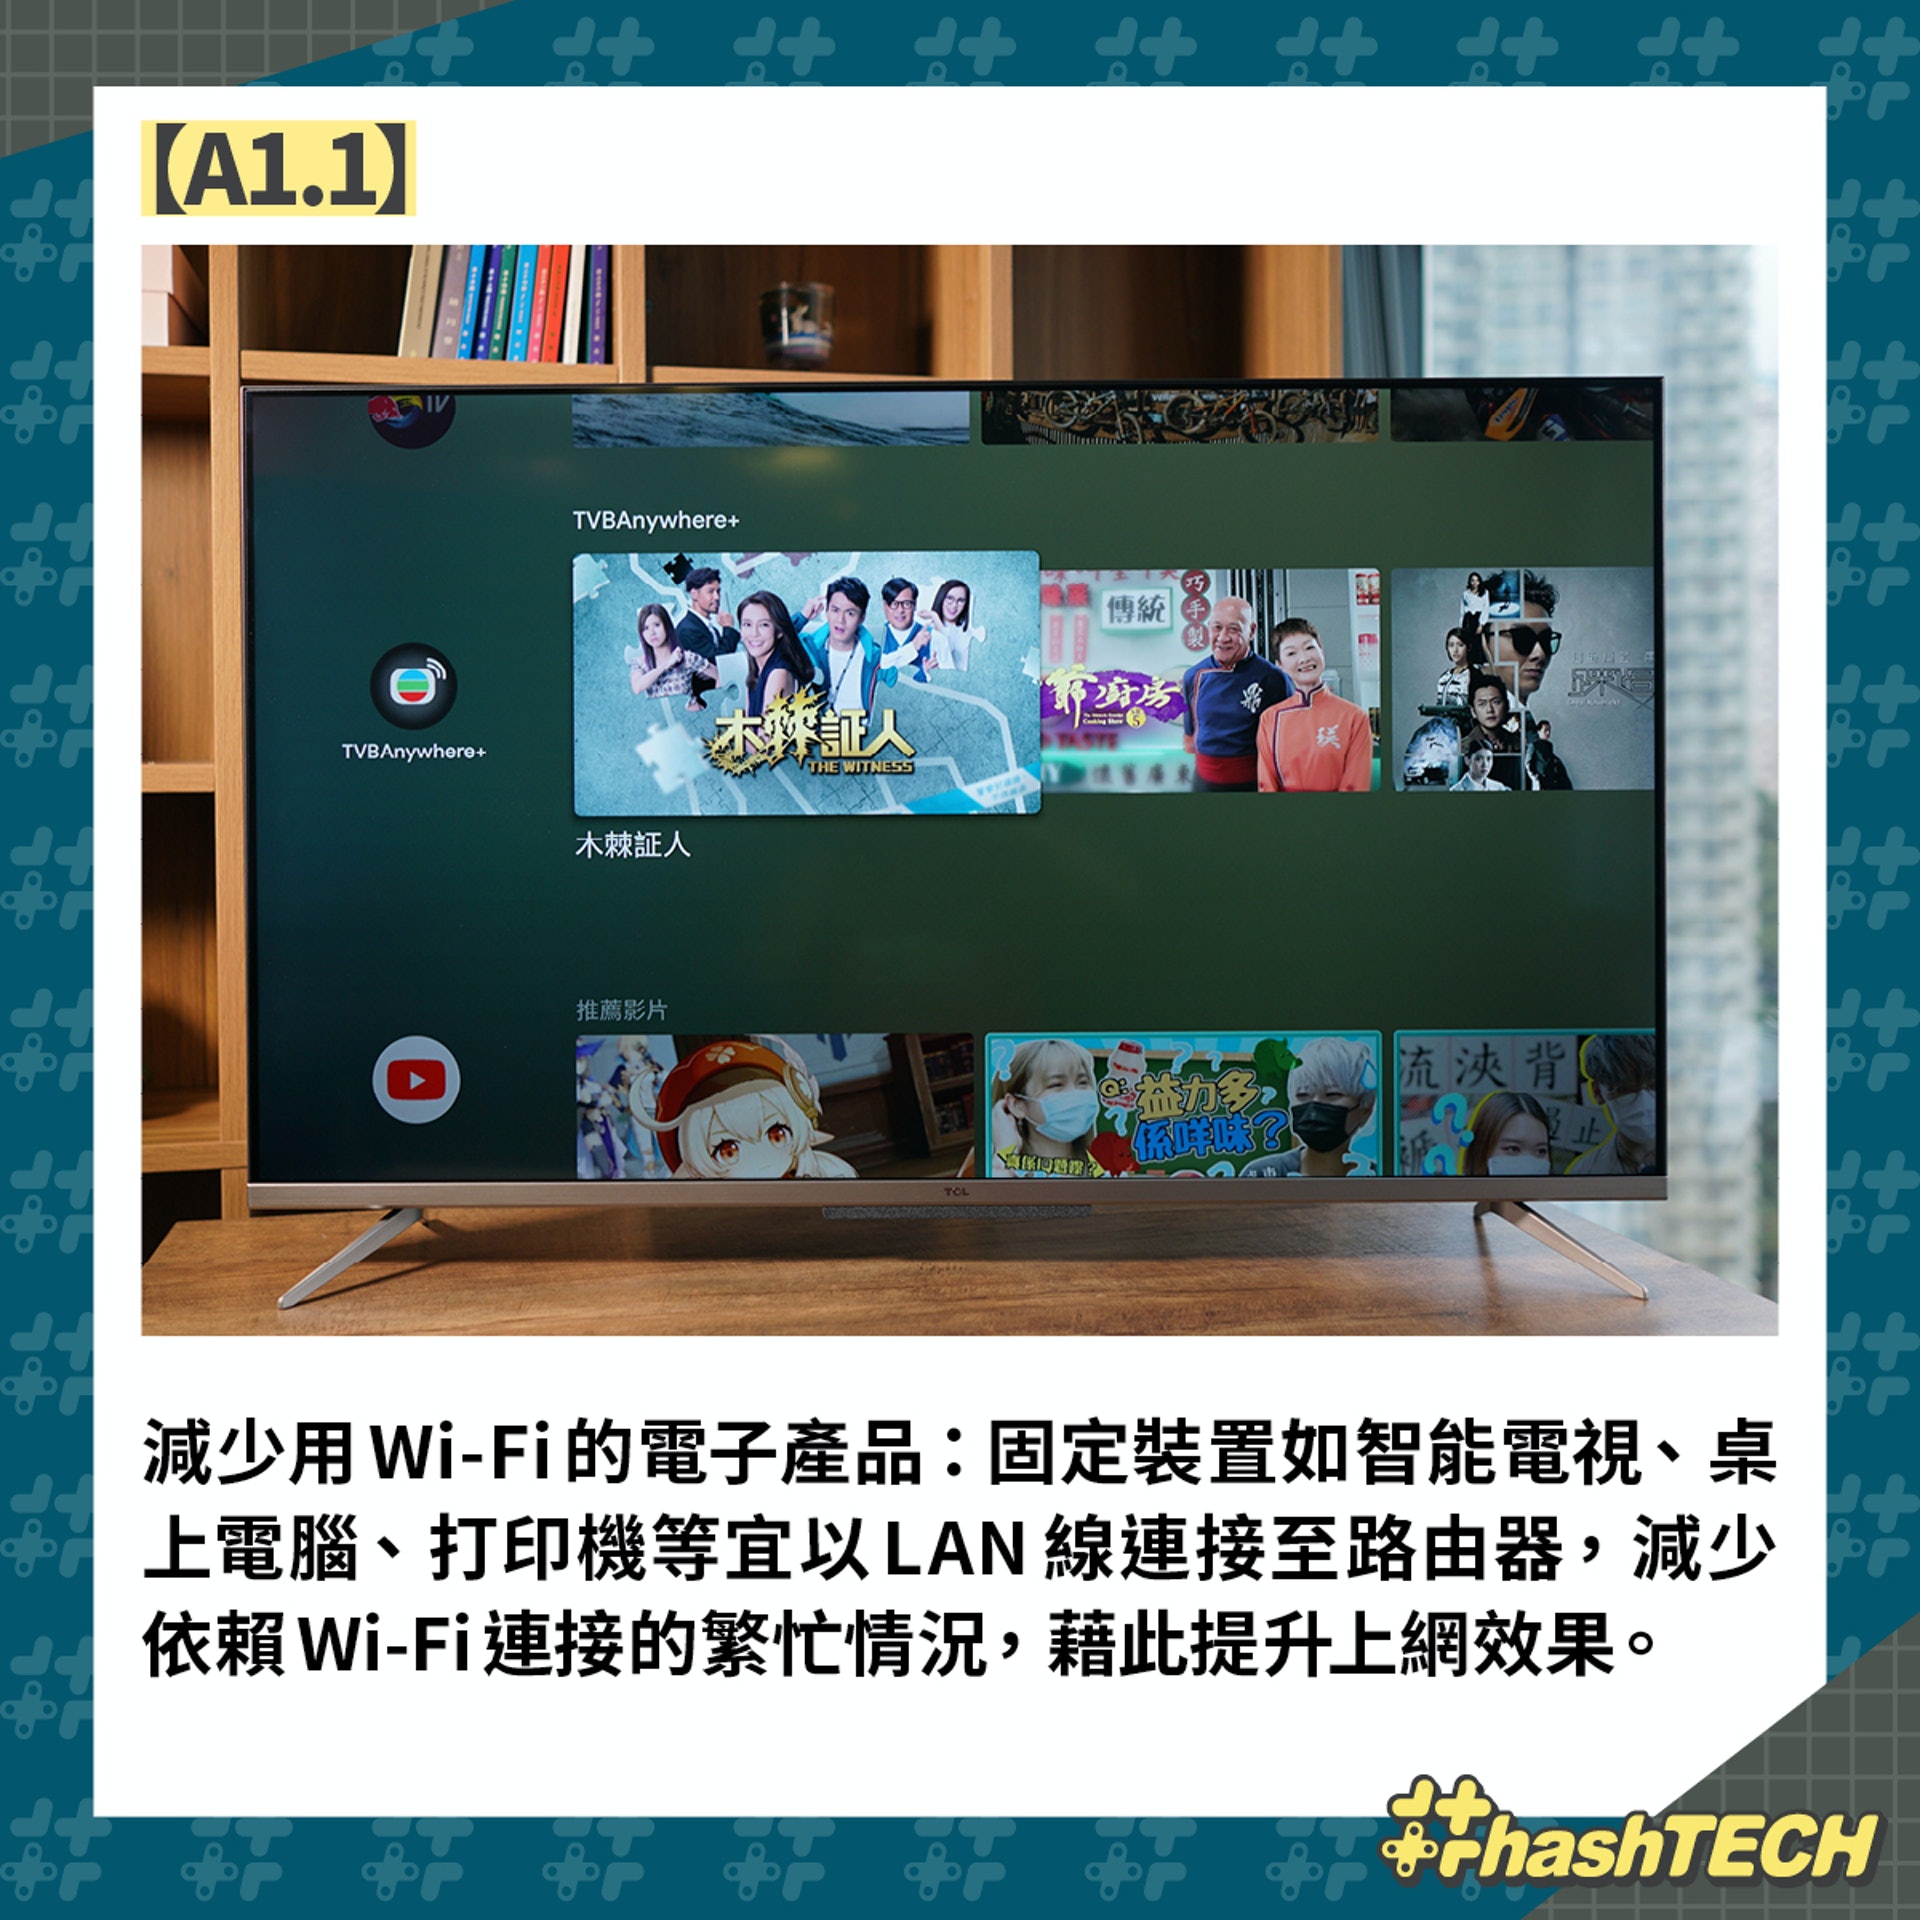 Wi-Fi Router 8招貼士提升上網效能：減少用Wi-Fi的電子產品：固定裝置如智能電視、桌上電腦、打印機等宜以LAN線連接至路由器，減少依賴Wi-Fi連接的繁忙情況，藉此提升上網效果。（香港01美術部製圖）